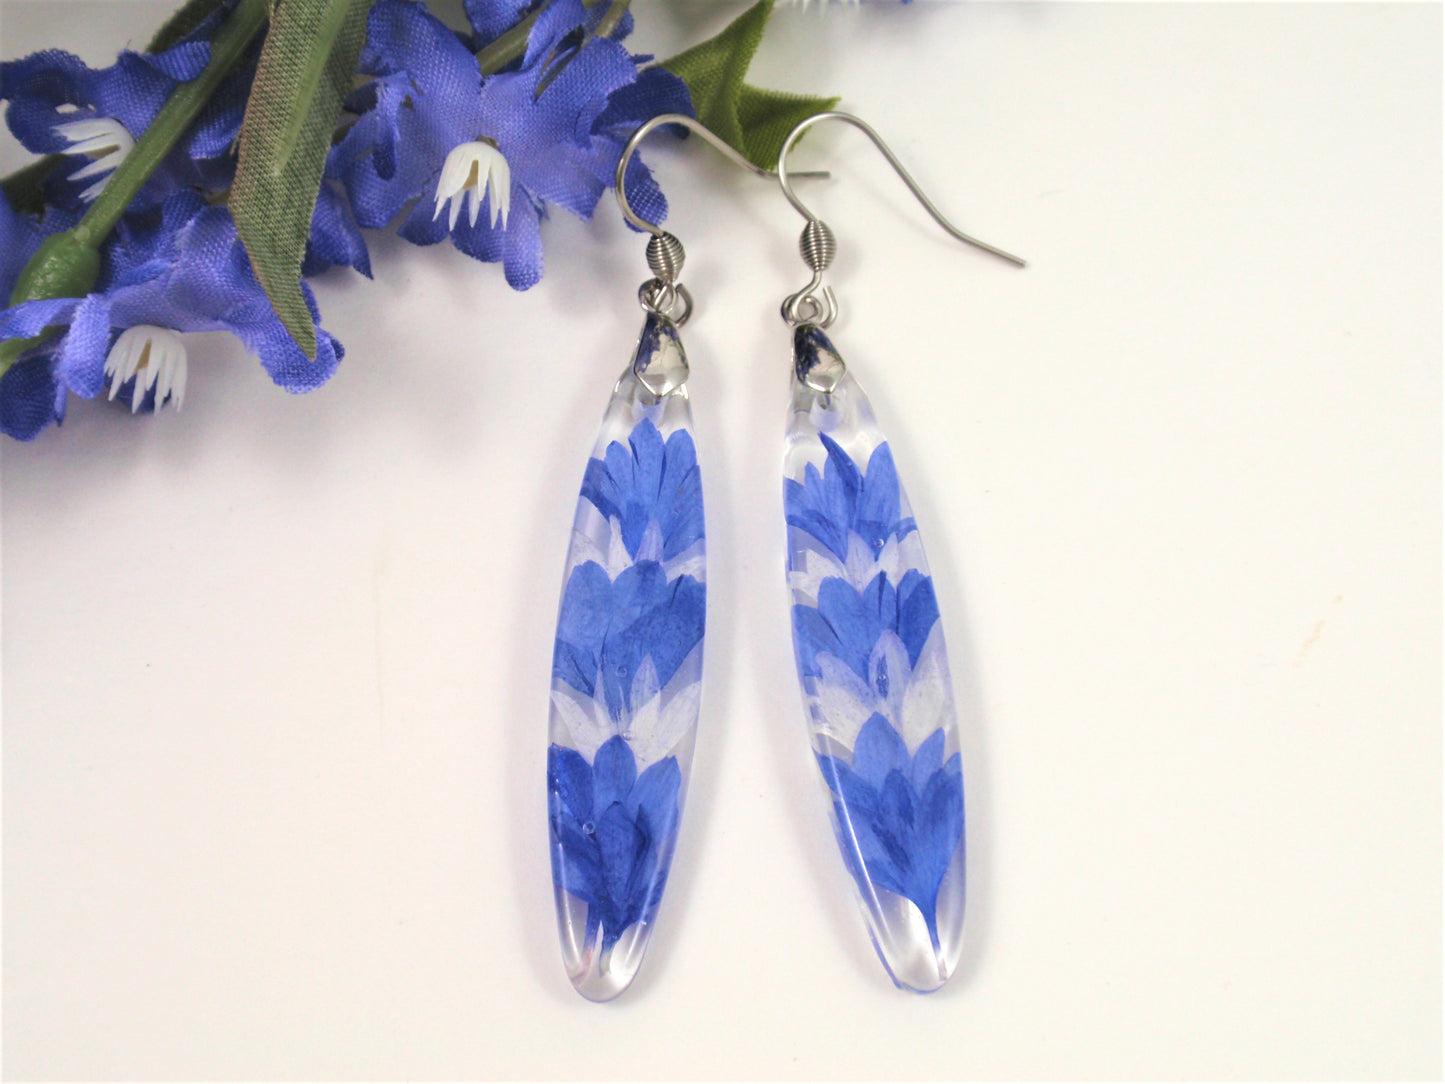 Pressed flower Nature earrings, Blue Cornflower petals Resin Jewelry